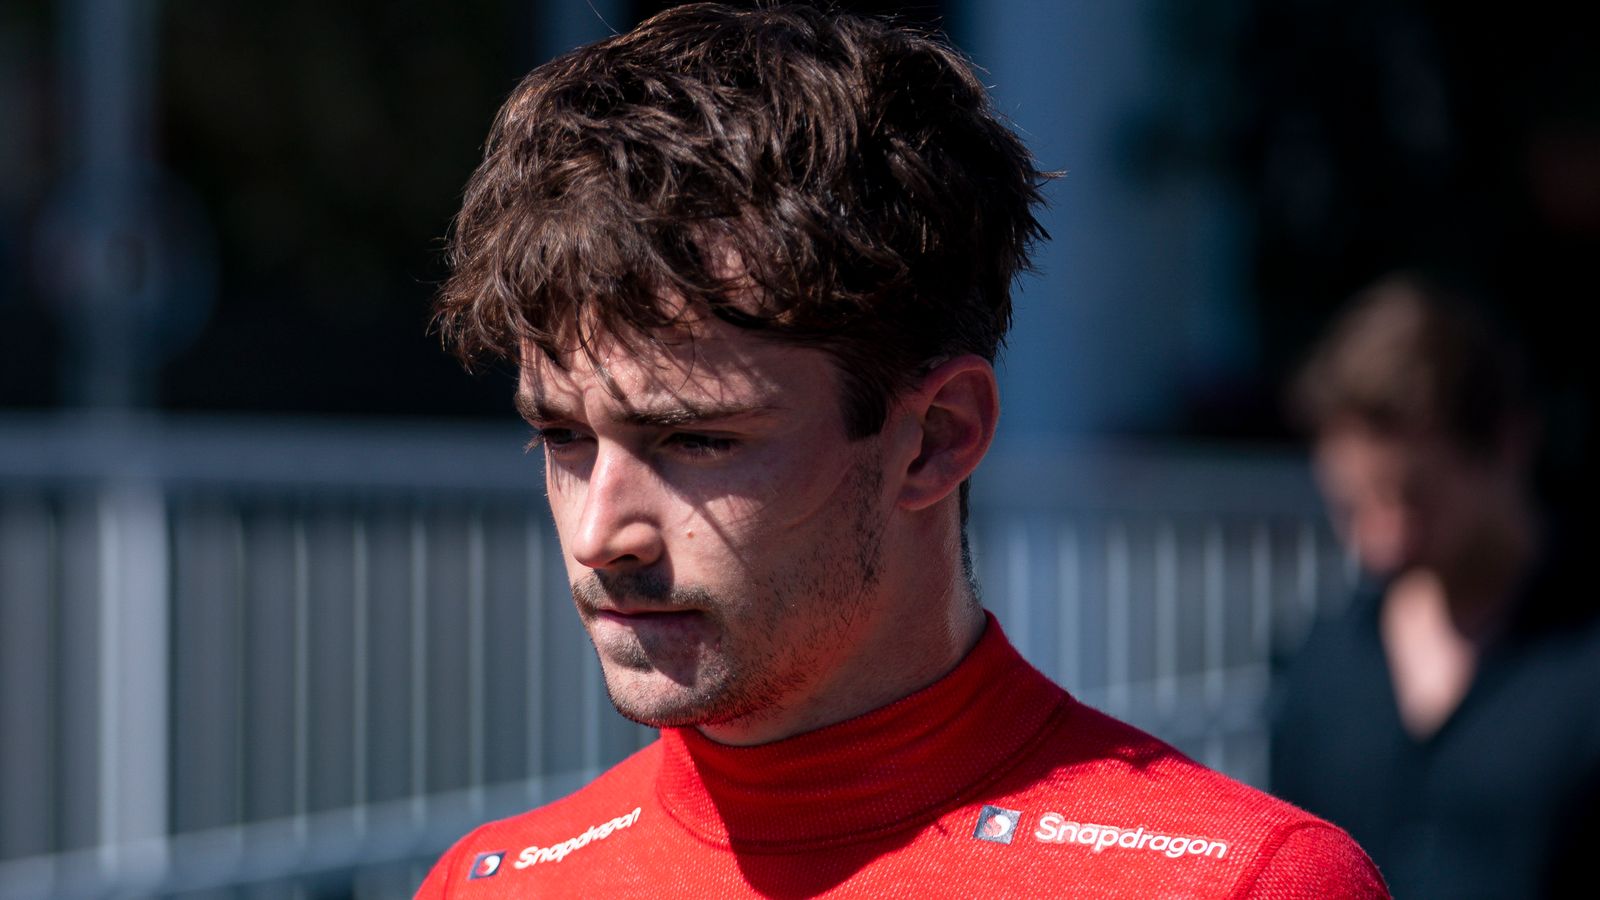 Azerbaijan GP: Charles Leclerc ‘hurt’ after Ferrari engine failure as Mattia Binotto urges patience